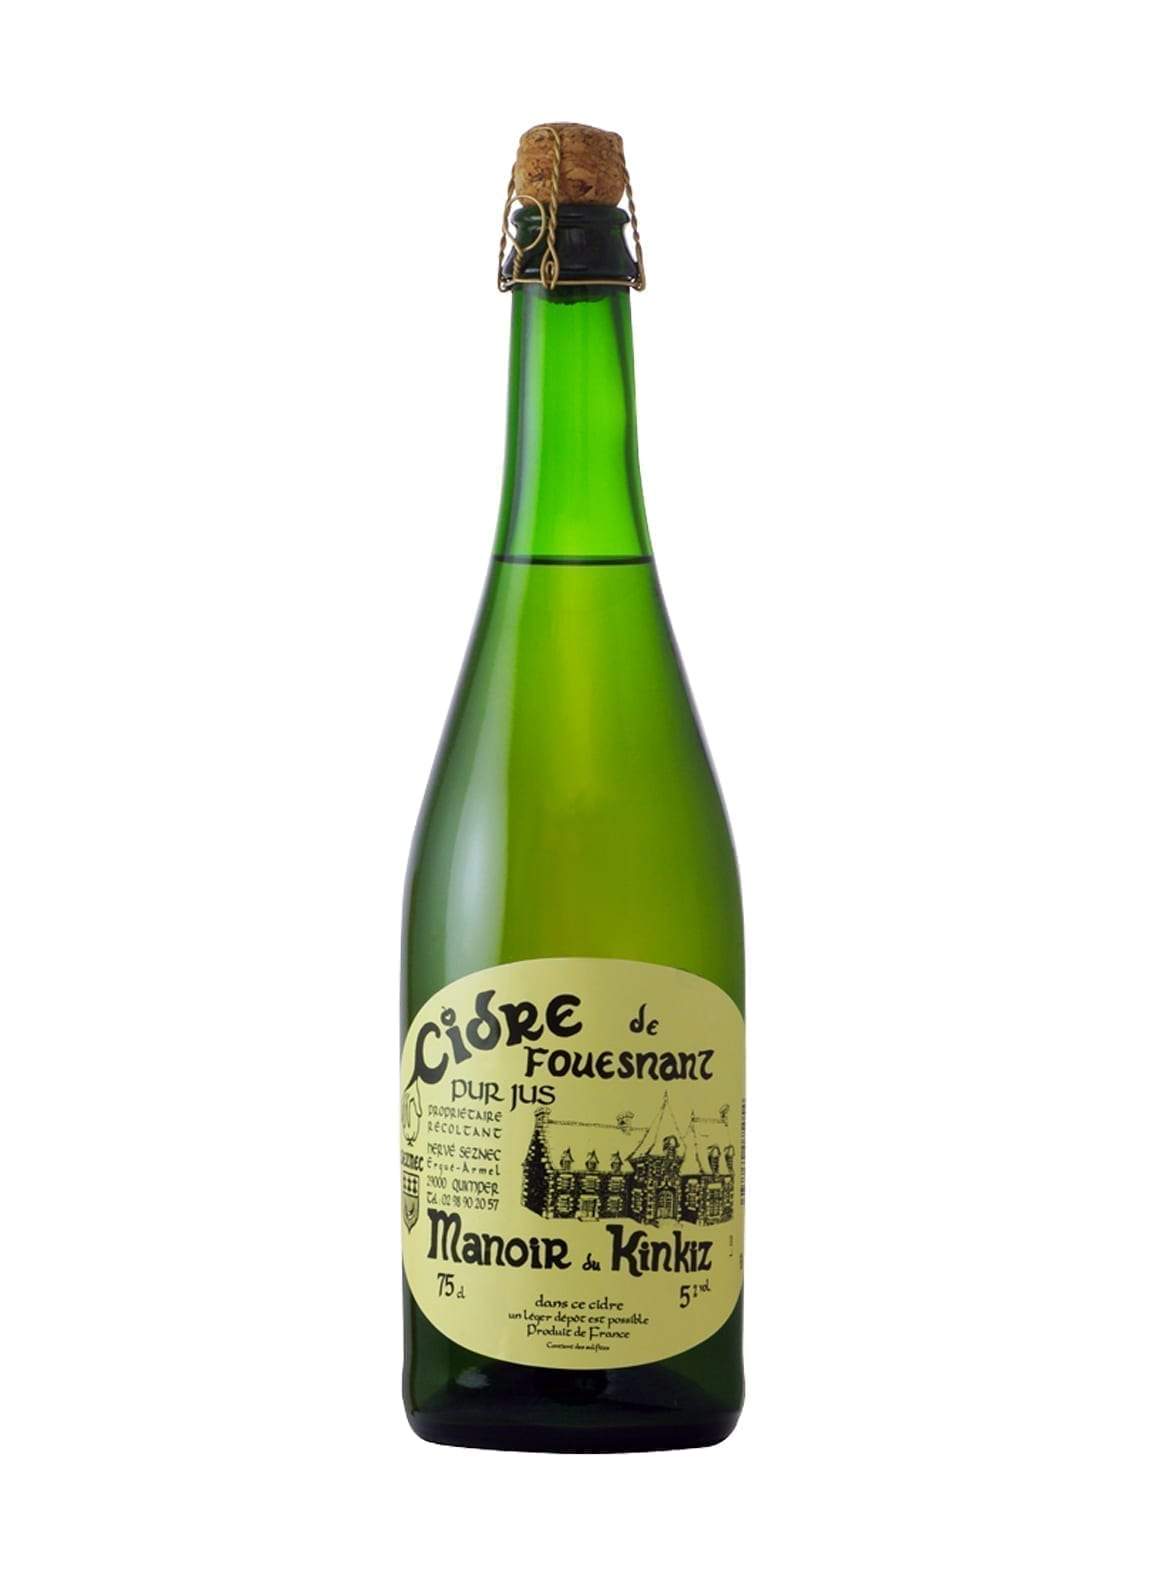 Manoir Kinkiz Cidre 'Fouesnant' (semi-dry apple cider) 6% 750ml | Hard Cider | Shop online at Spirits of France